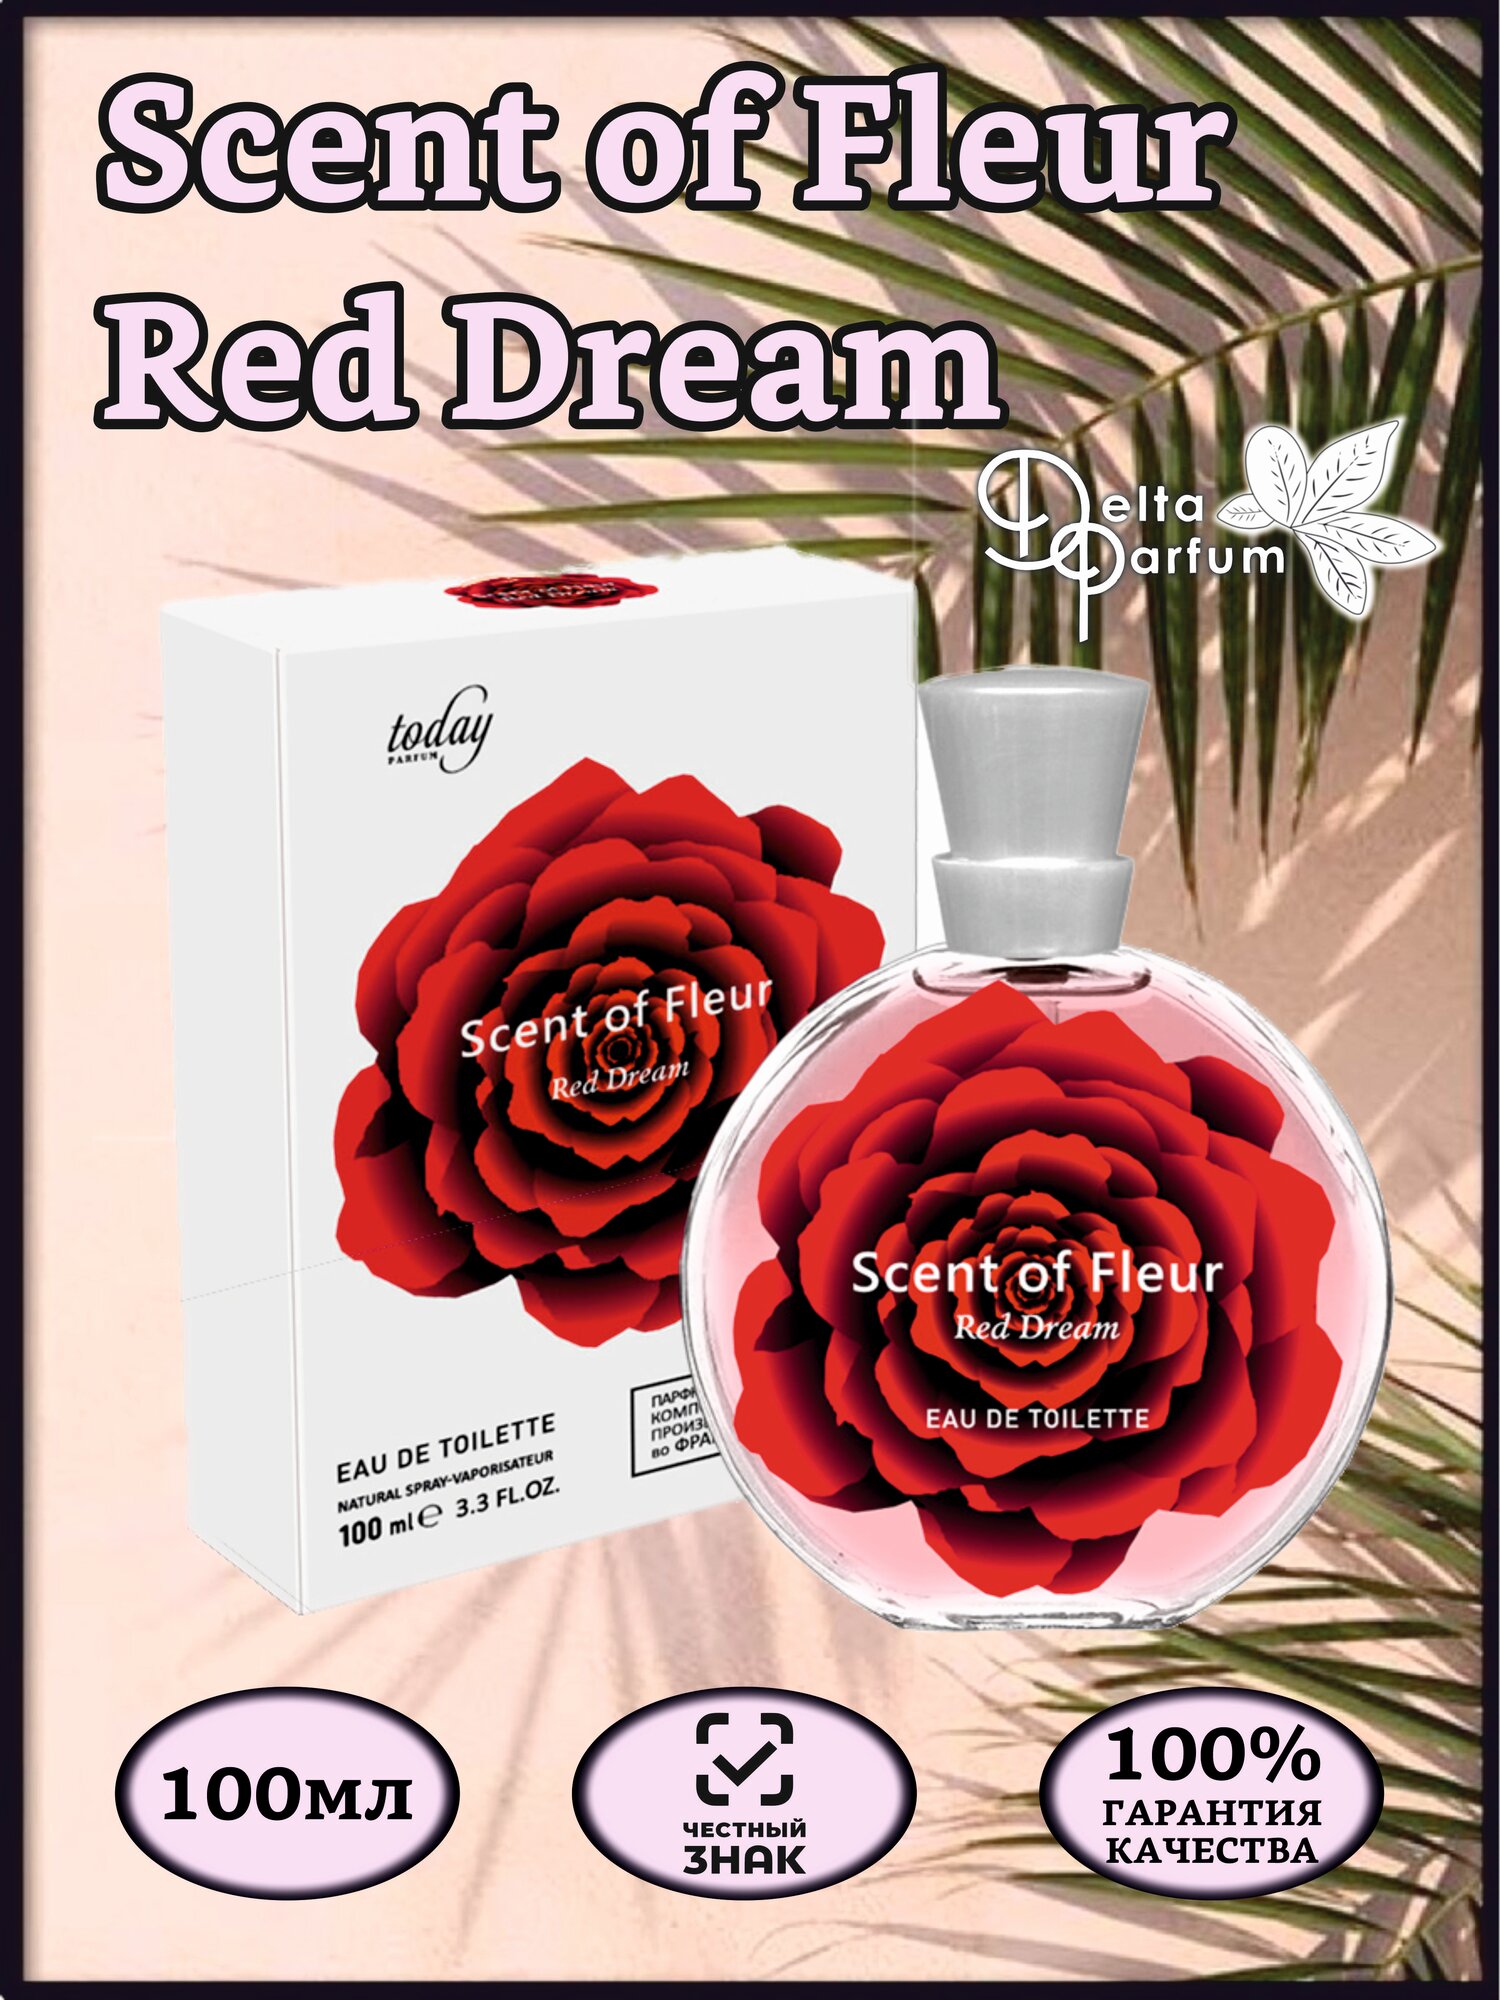 TODAY PARFUM (Delta parfum) Туалетная вода женская SCENT OF FLEUR RED DREAM